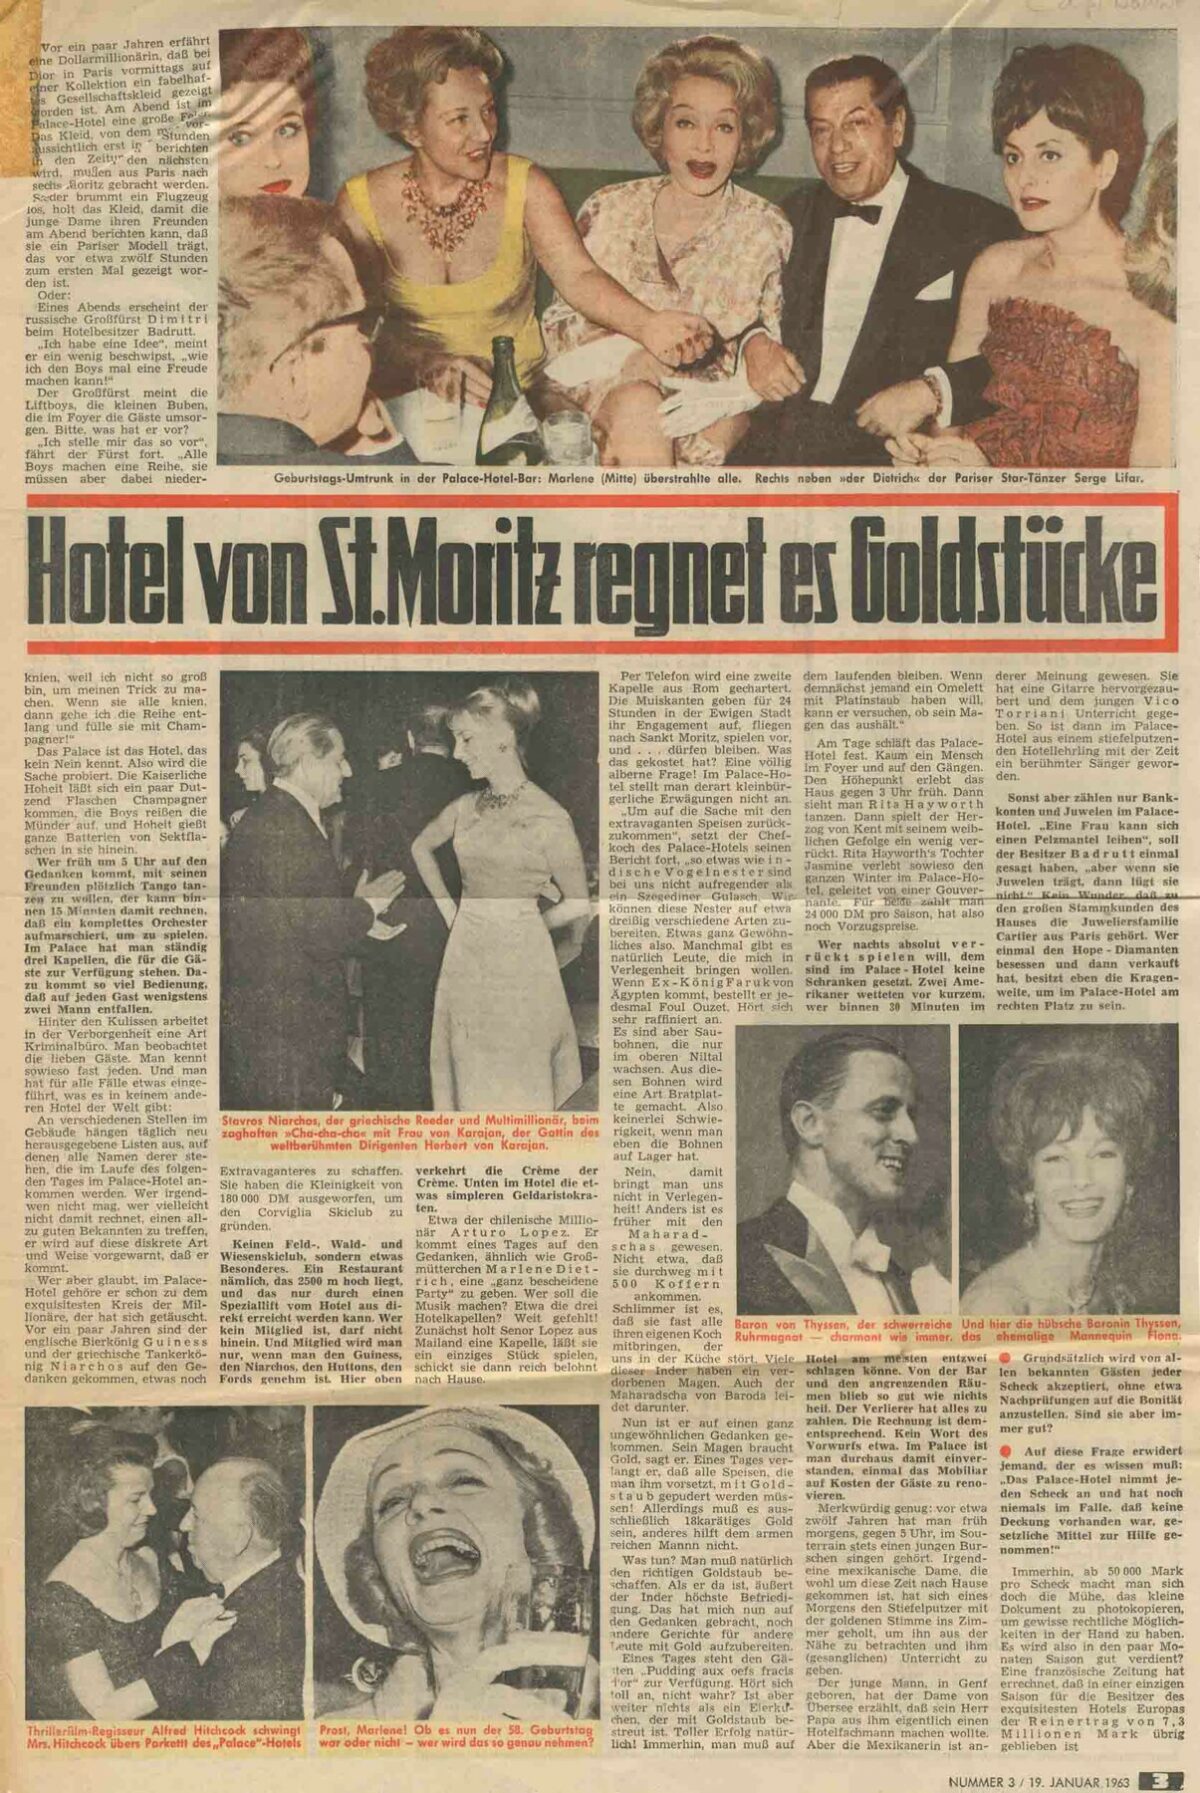 German language newspaper cutting from 19 January 1963